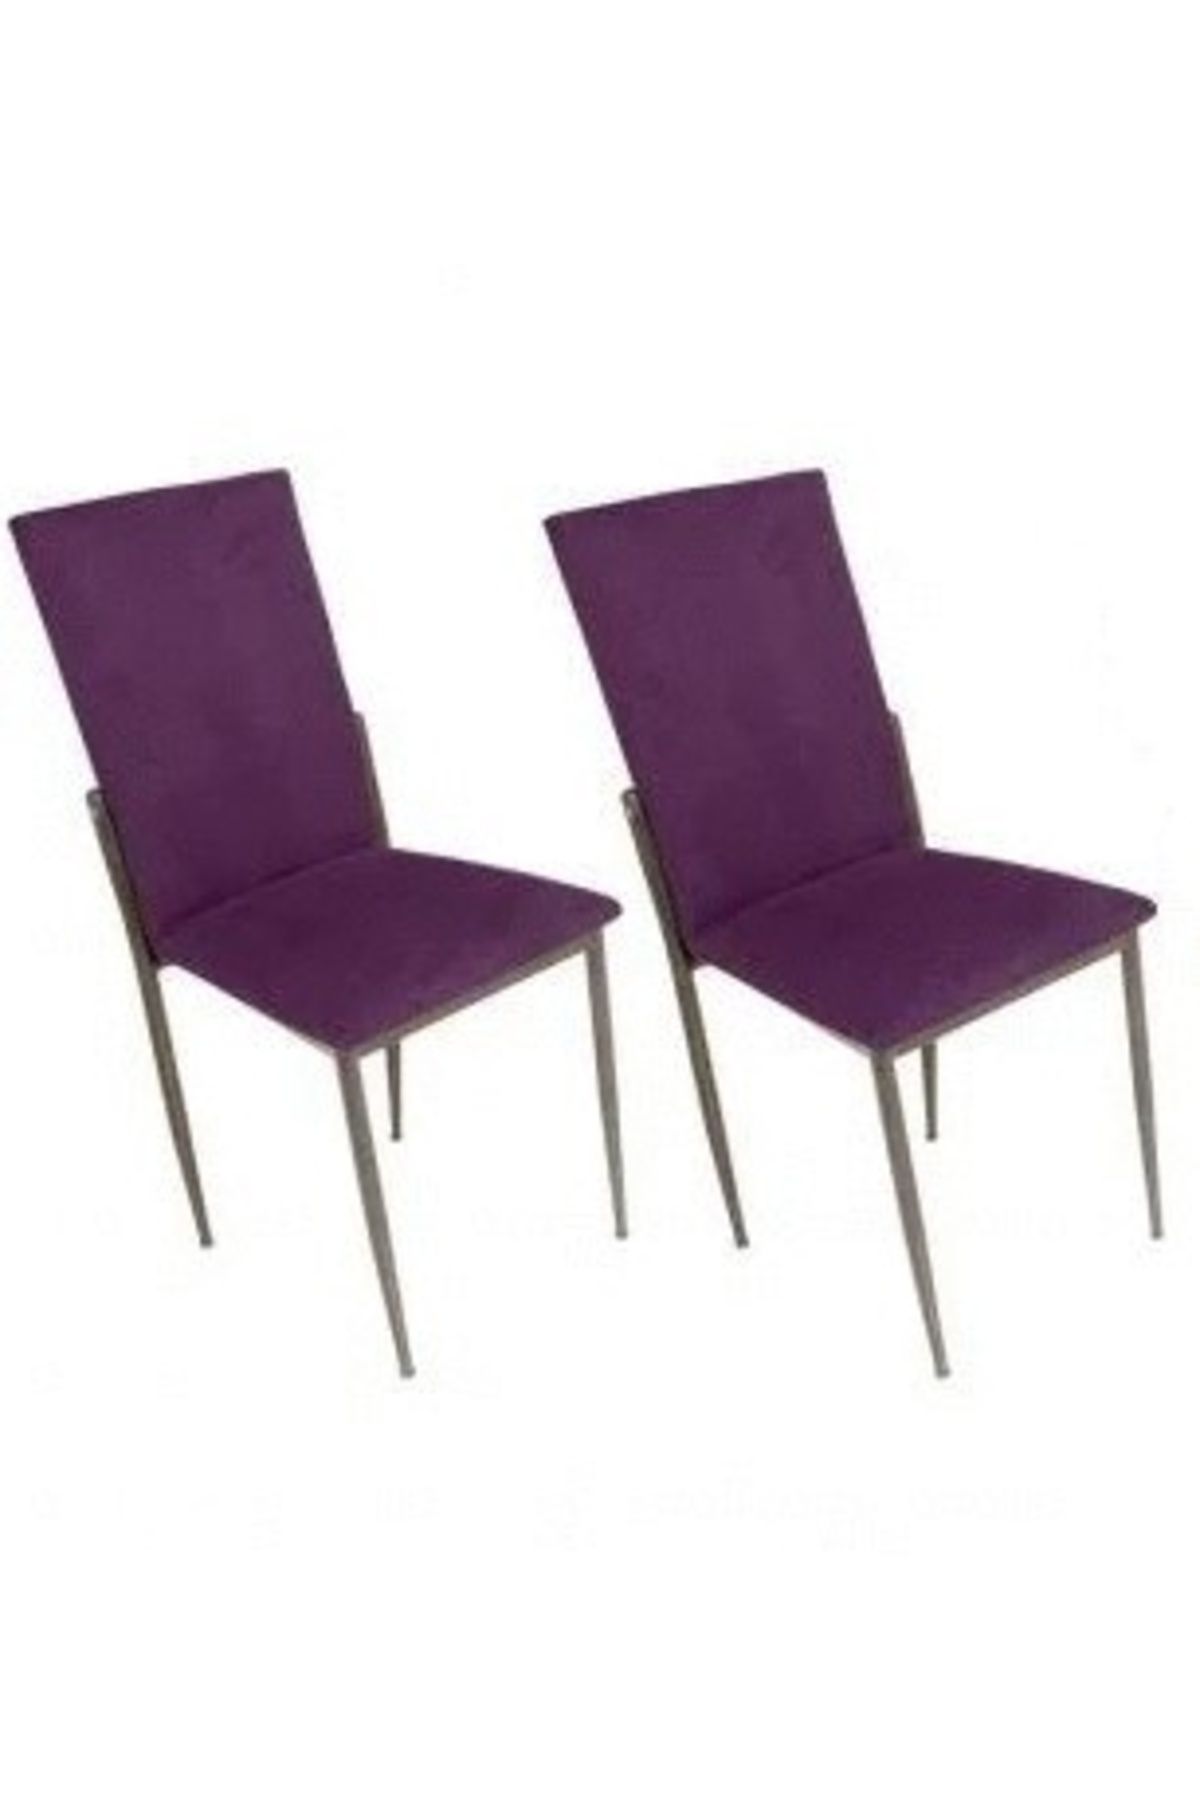 BENGİ TİCARET Sandalye St Gözde Model Metal Transmisyon Nikelaj Mor Renk Kumaş 2 Adet El Yapım